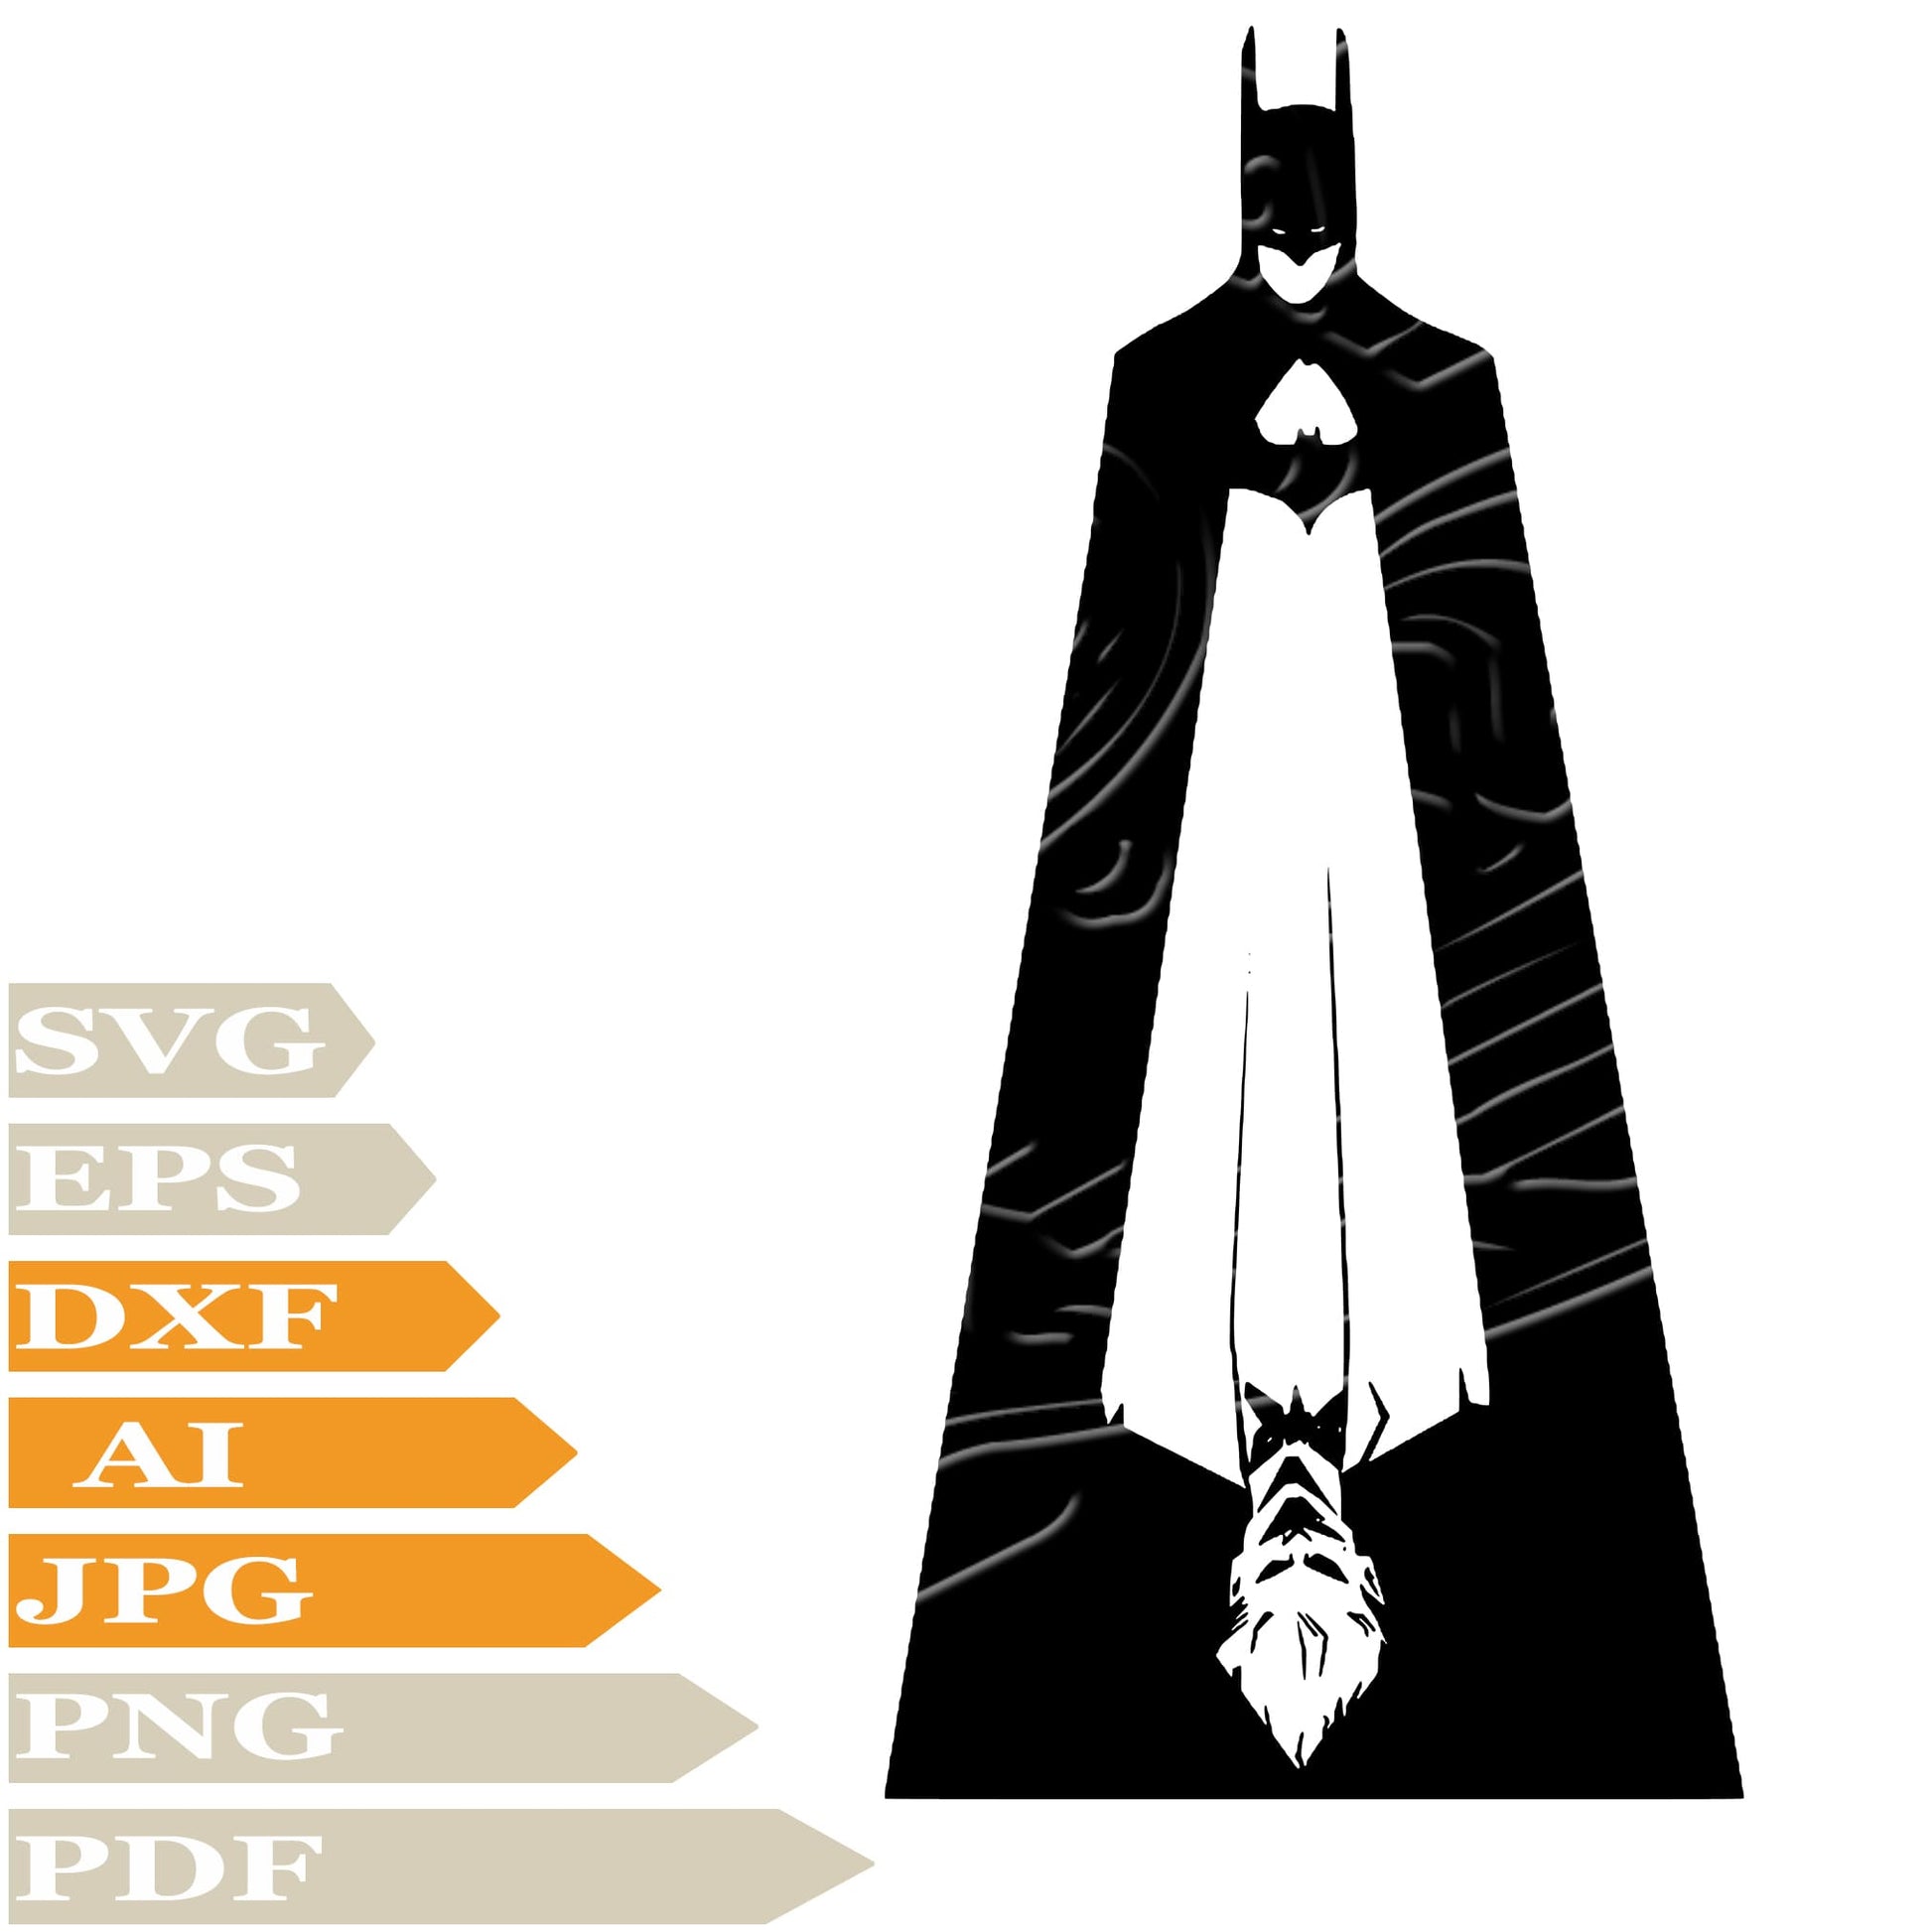 Batman Joker, Batman Logo Svg File, Image Cut, Png, For Tattoo, Silhouette, Digital Vector Download, Cut File, Clipart, For Cricut